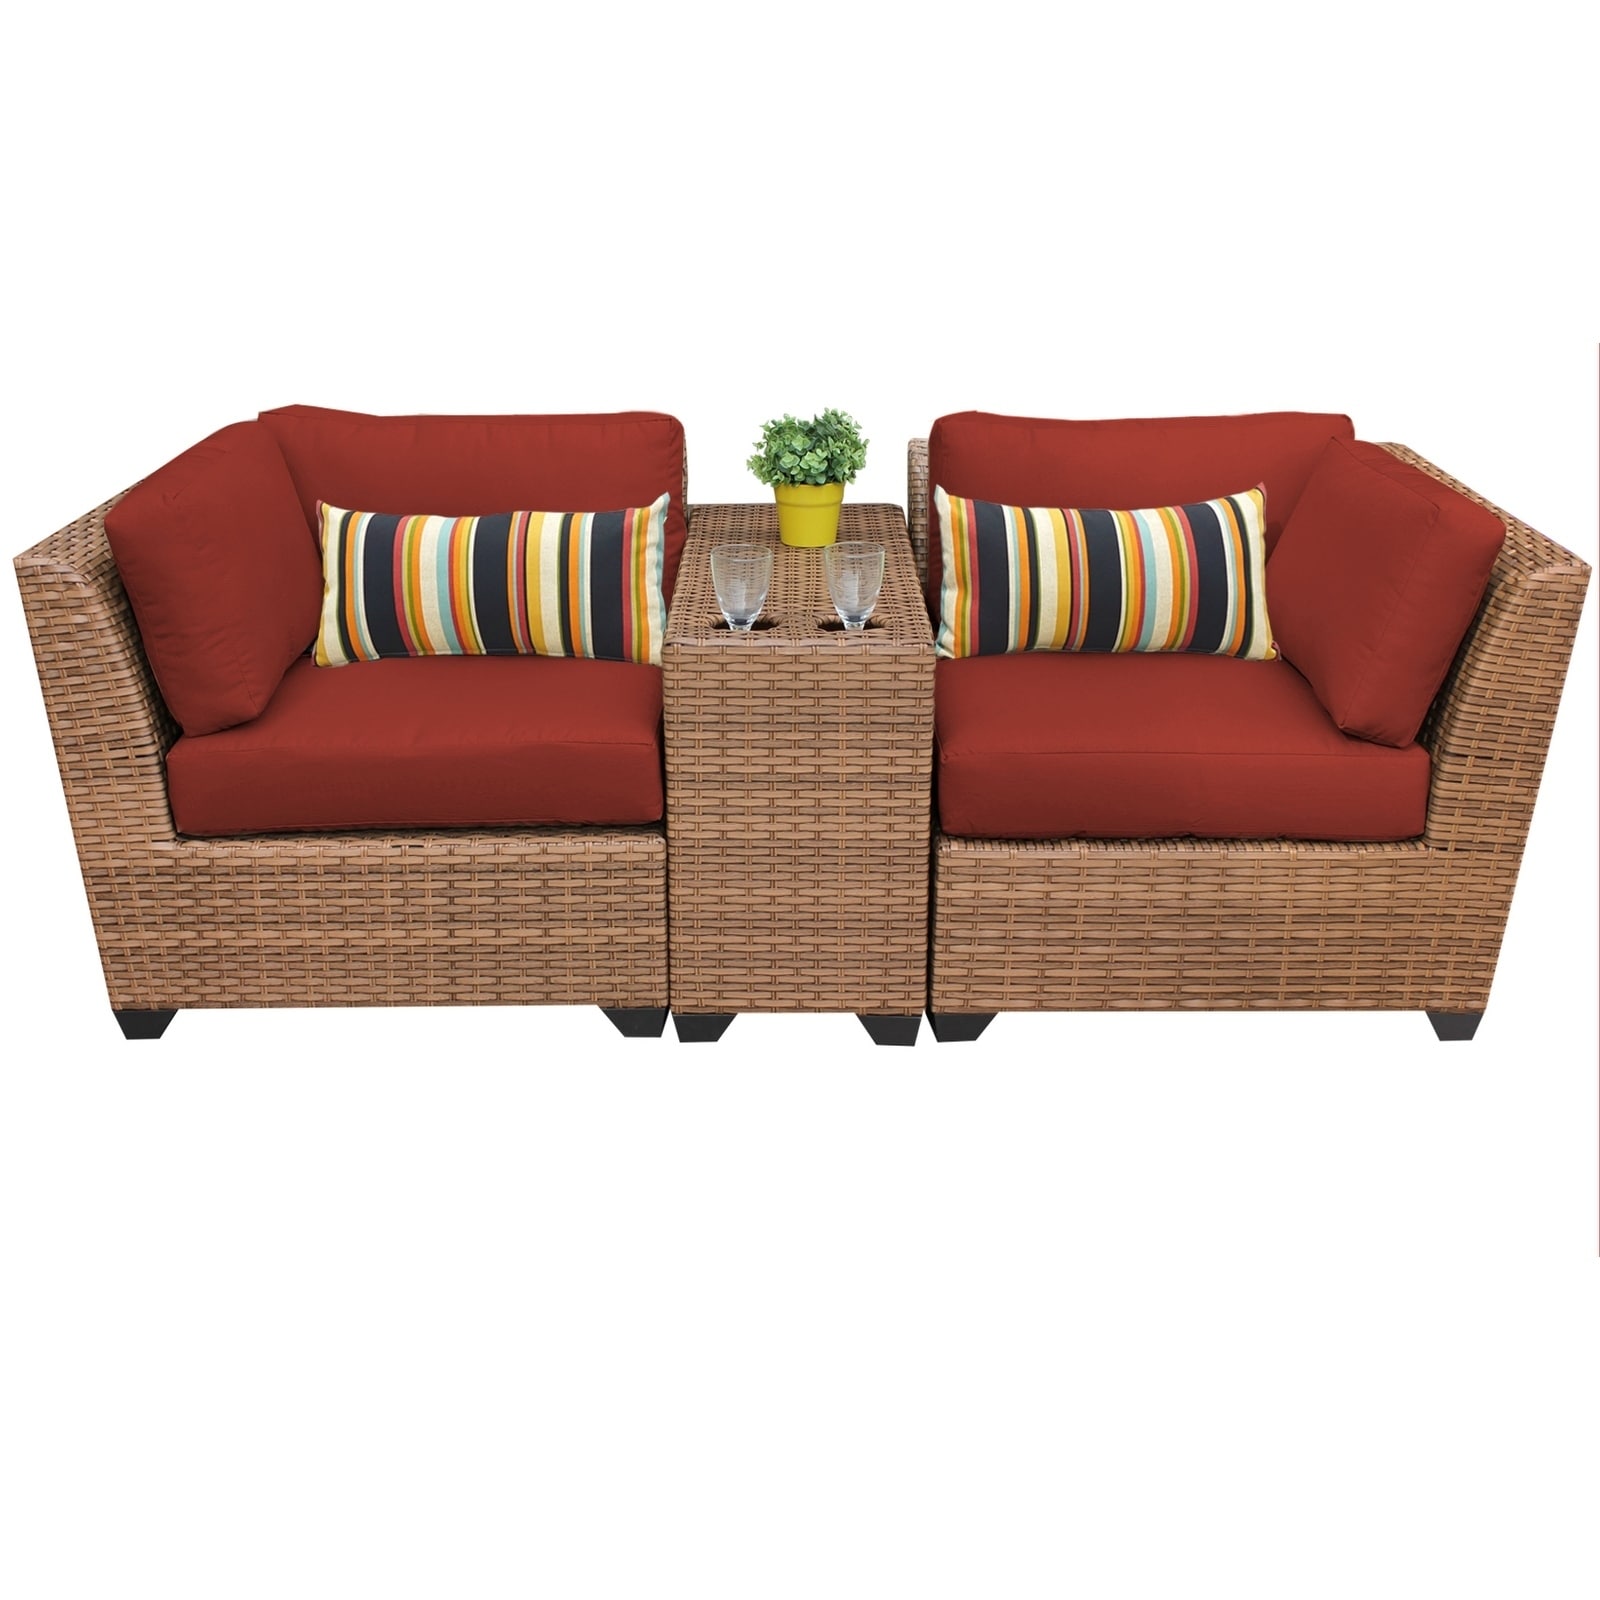 Laguna 3 Piece Outdoor Wicker Patio Furniture Set 03b